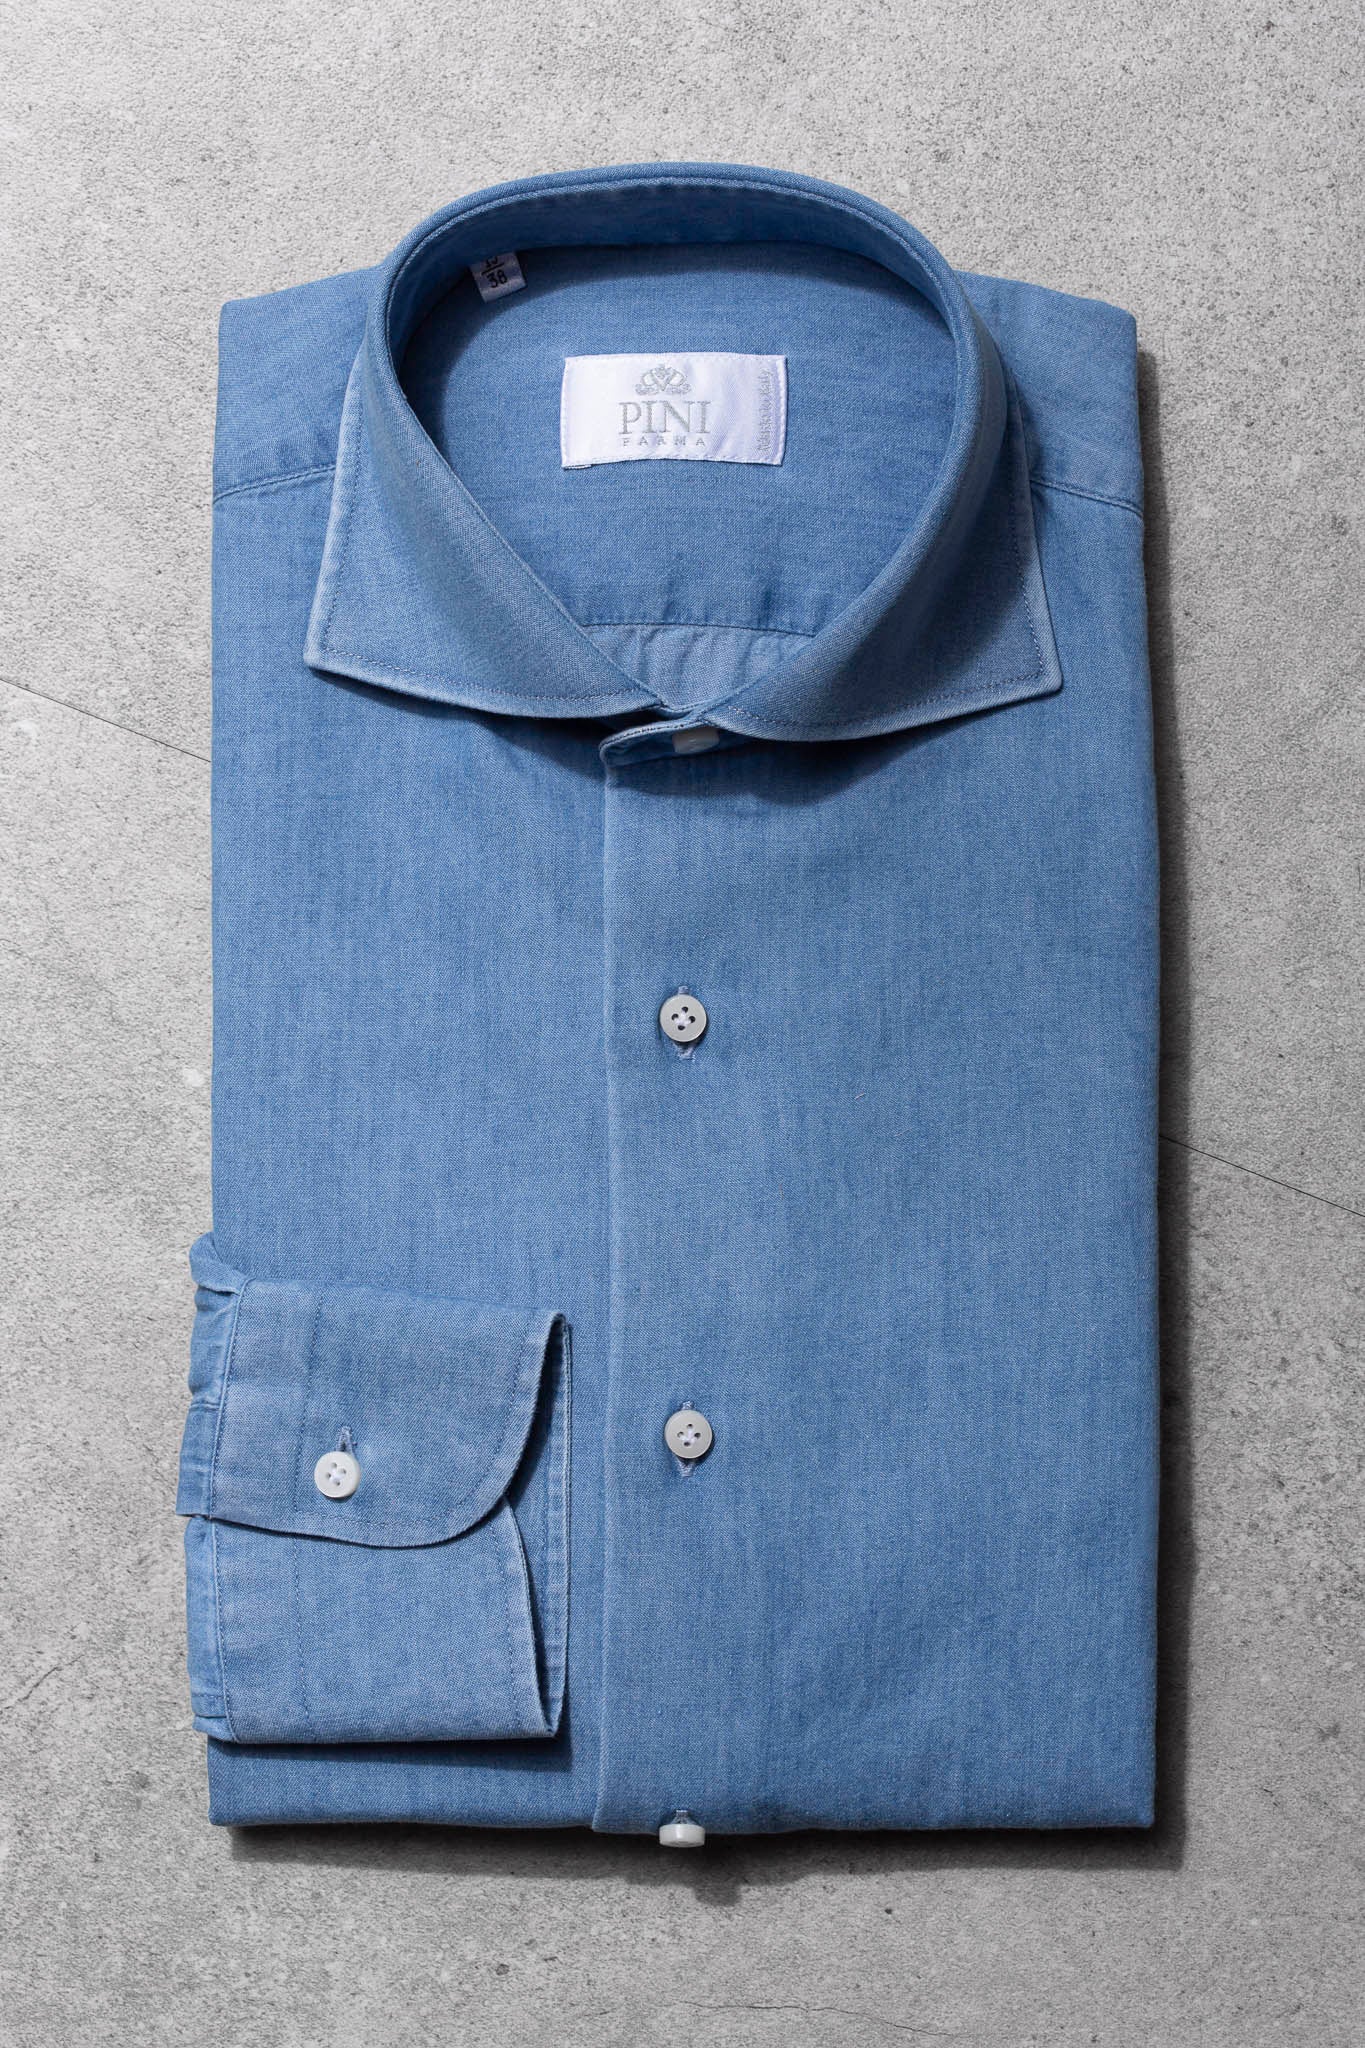 Denim blue shirt - Made in Italy